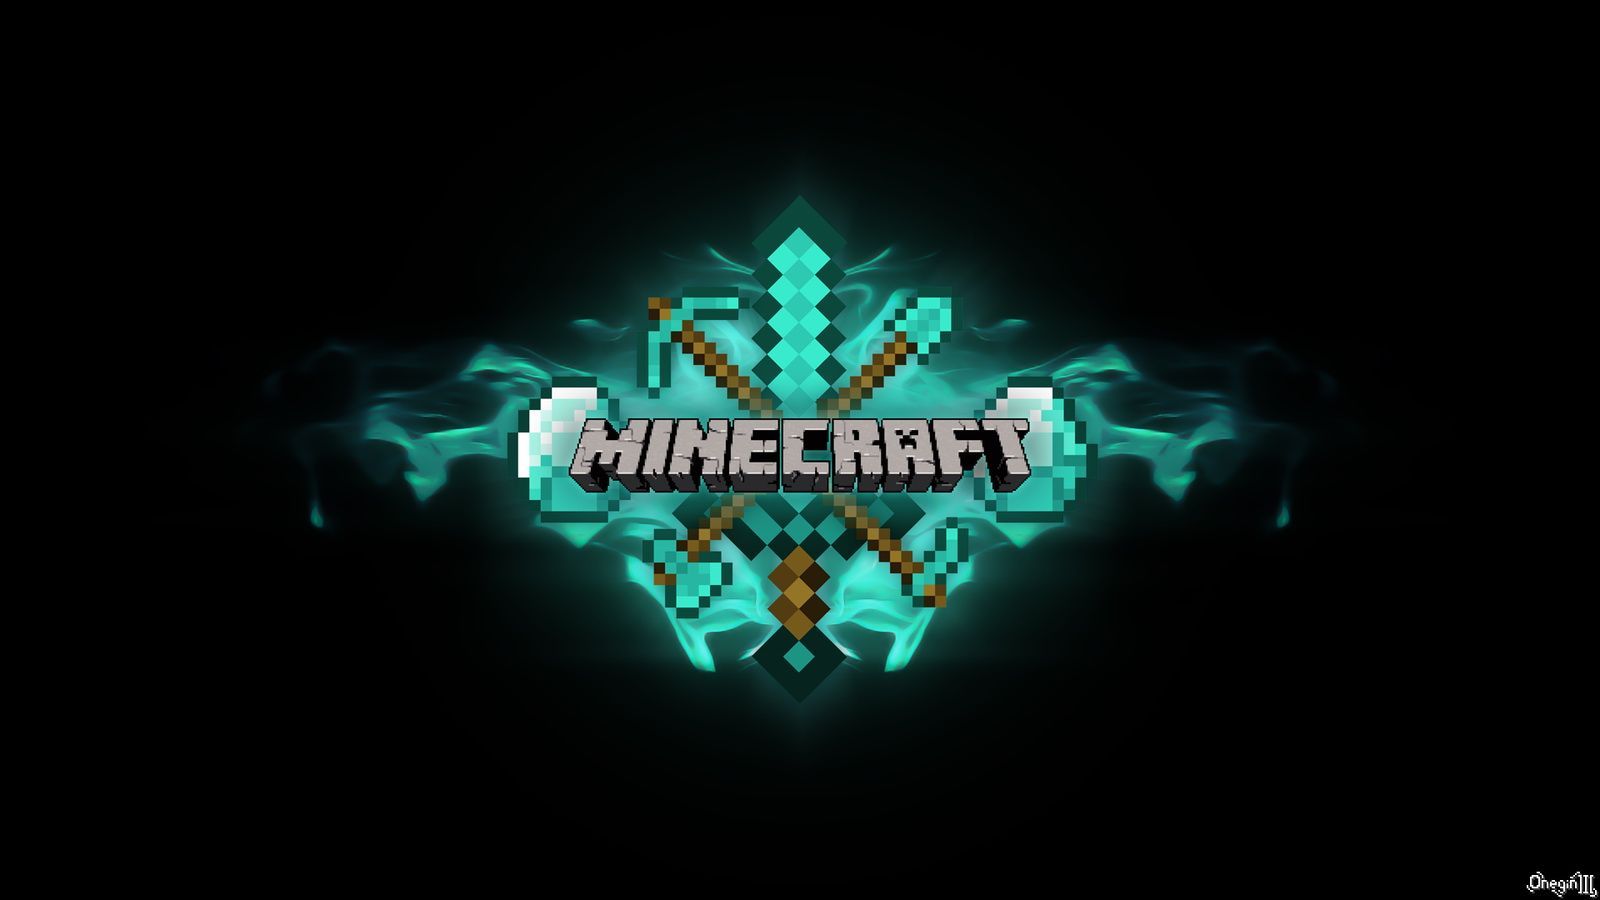 Minecraft Backgrounds - Minecraft help with seeds, servers, mods